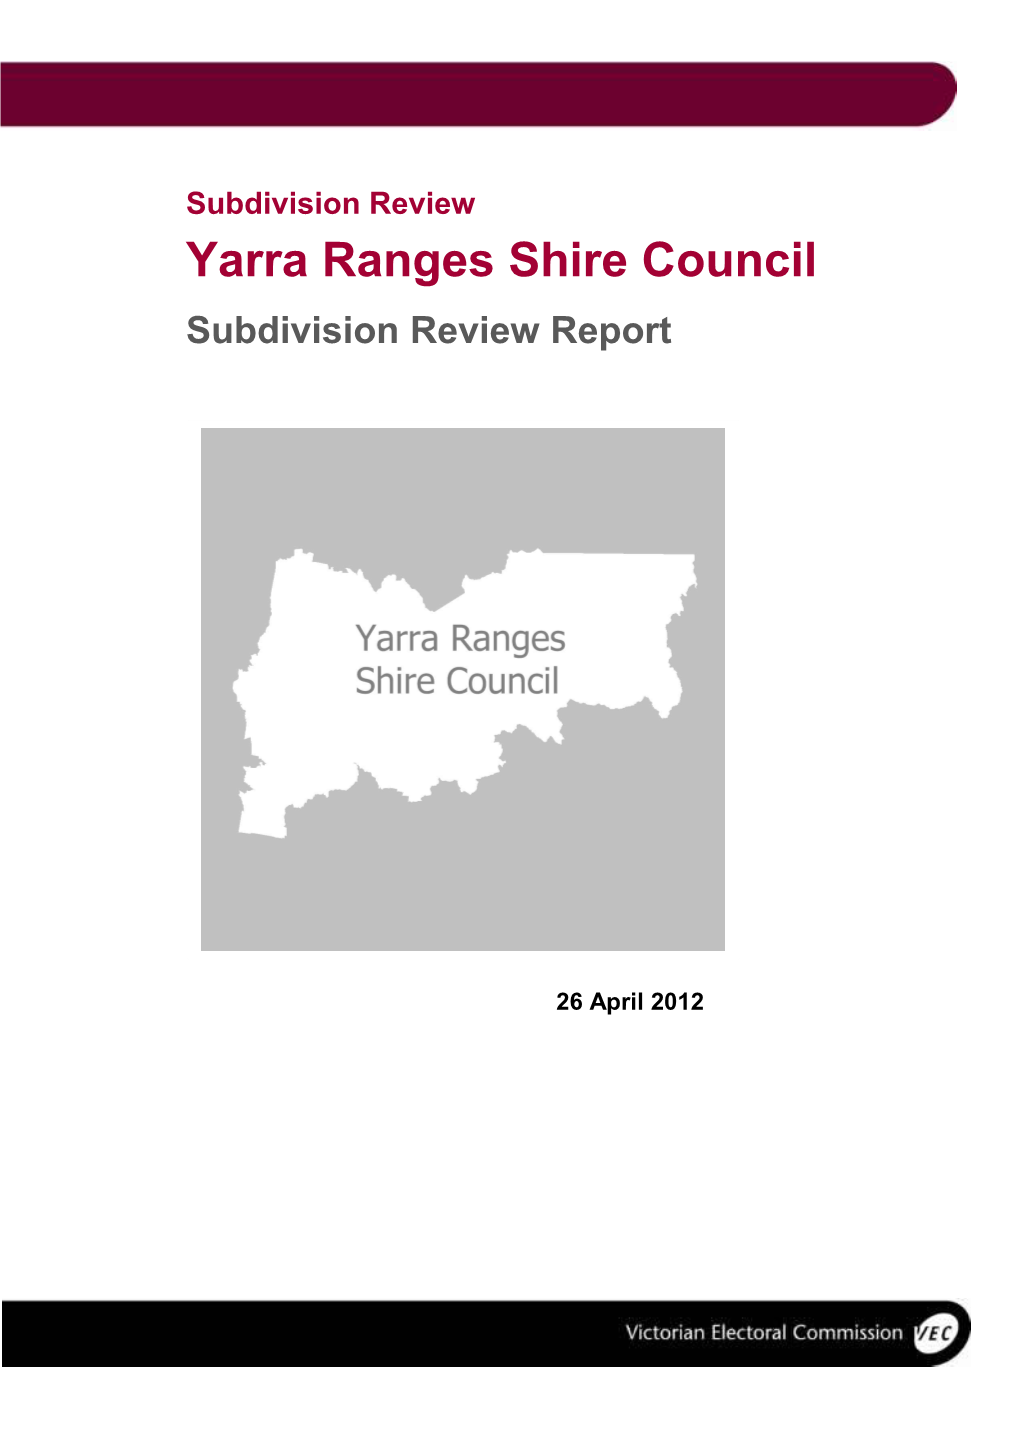 Subdivision Review Yarra Ranges Shirecouncil